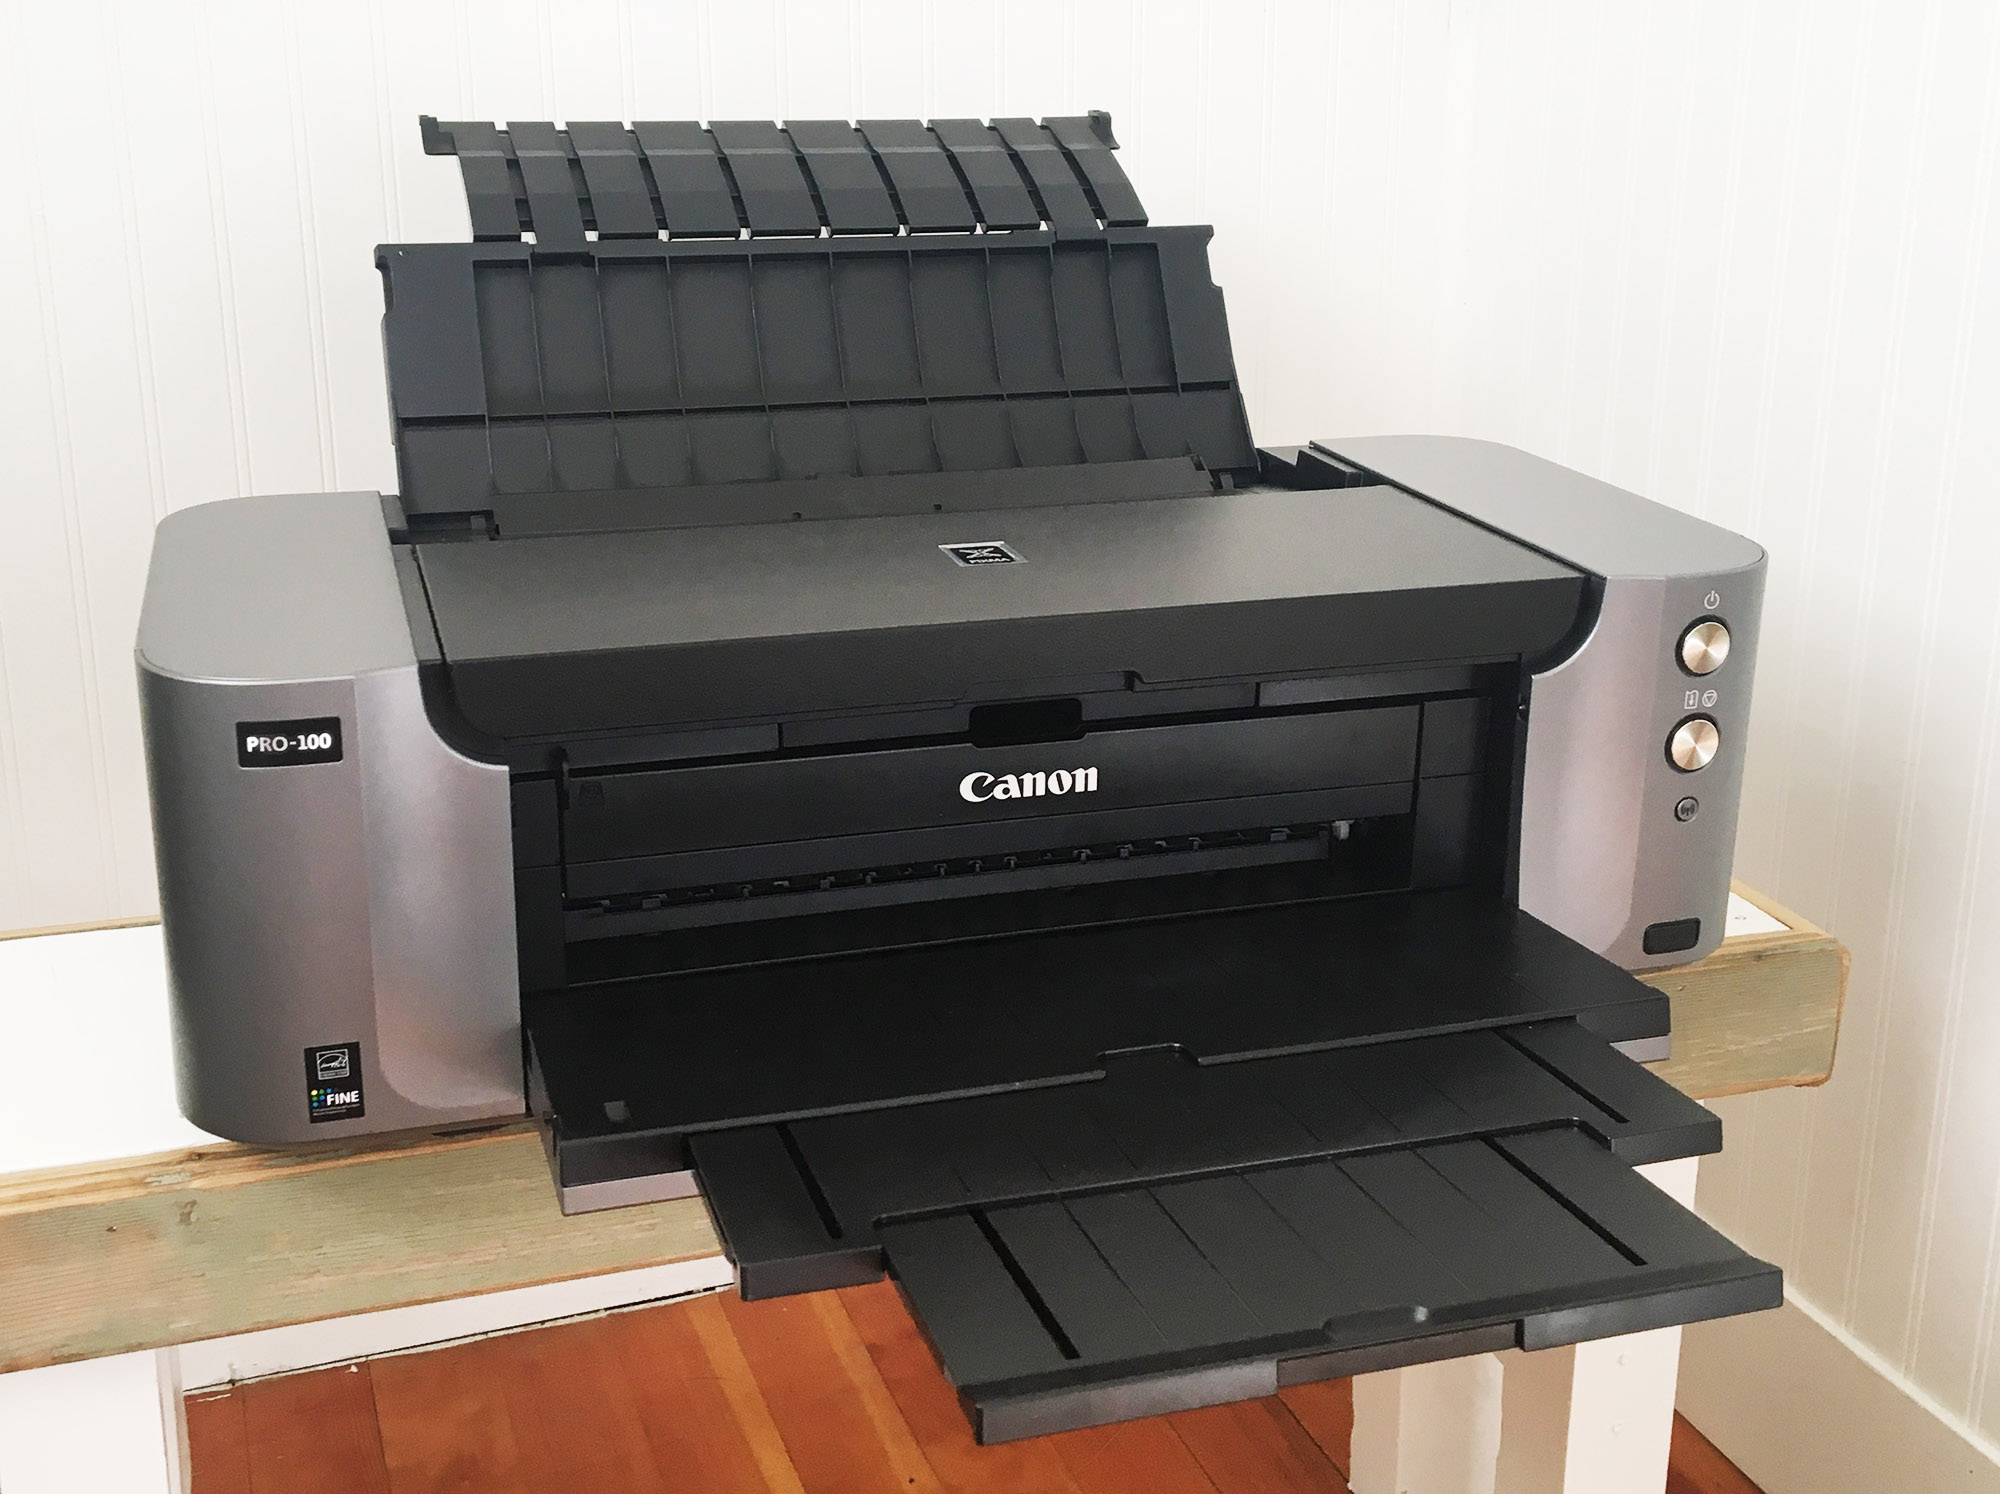 Minefelt Tilfredsstille Masaccio Canon PIXMA Pro-100 Printer review